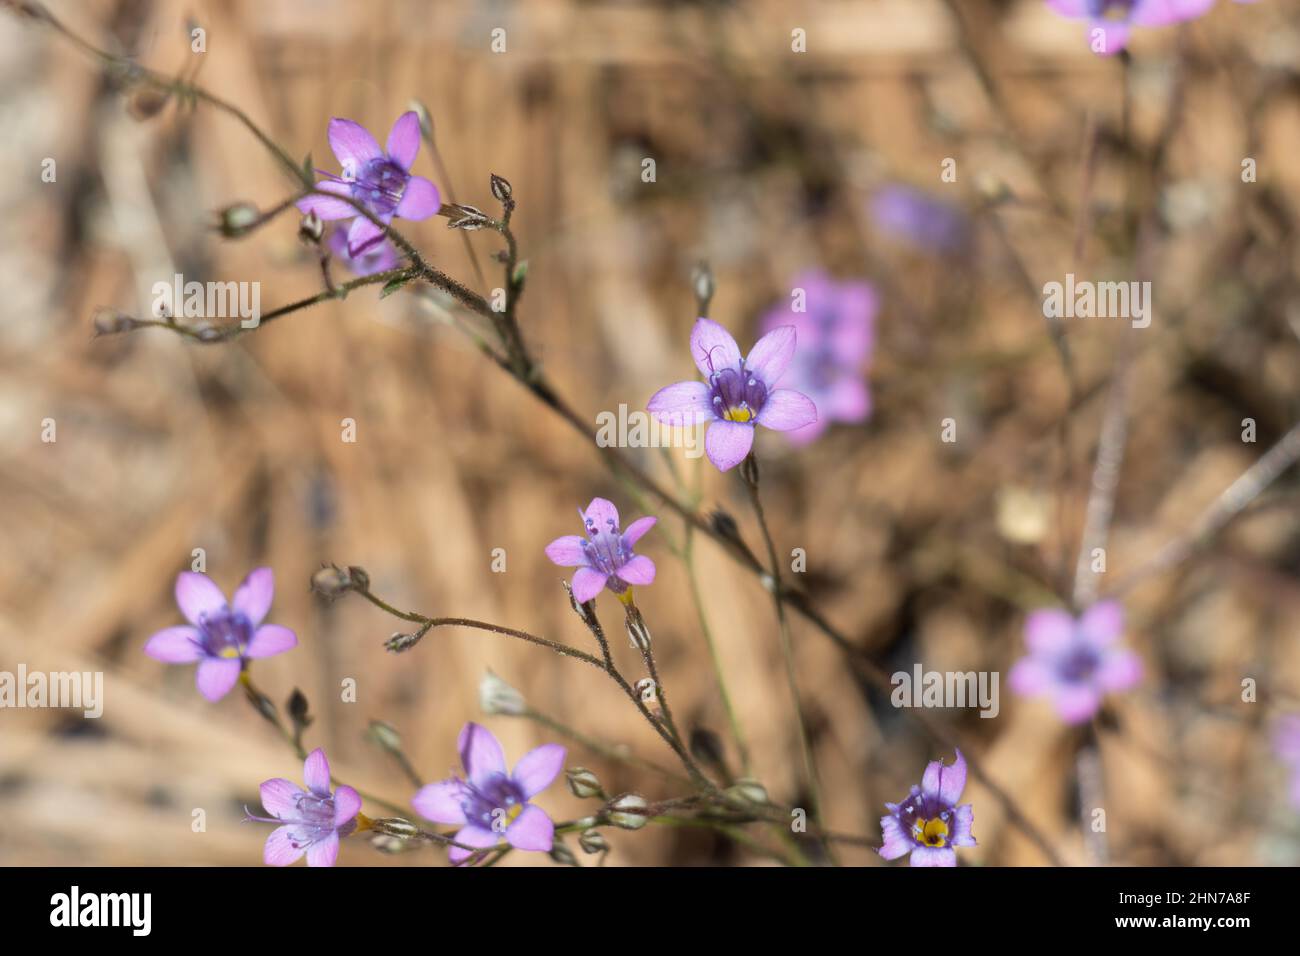 Purple flowering terminal cyme inflorescences of Saltugilia Splendens, Polemoniaceae, native annual herb in the San Gabriel Mountains, Summer. Stock Photo